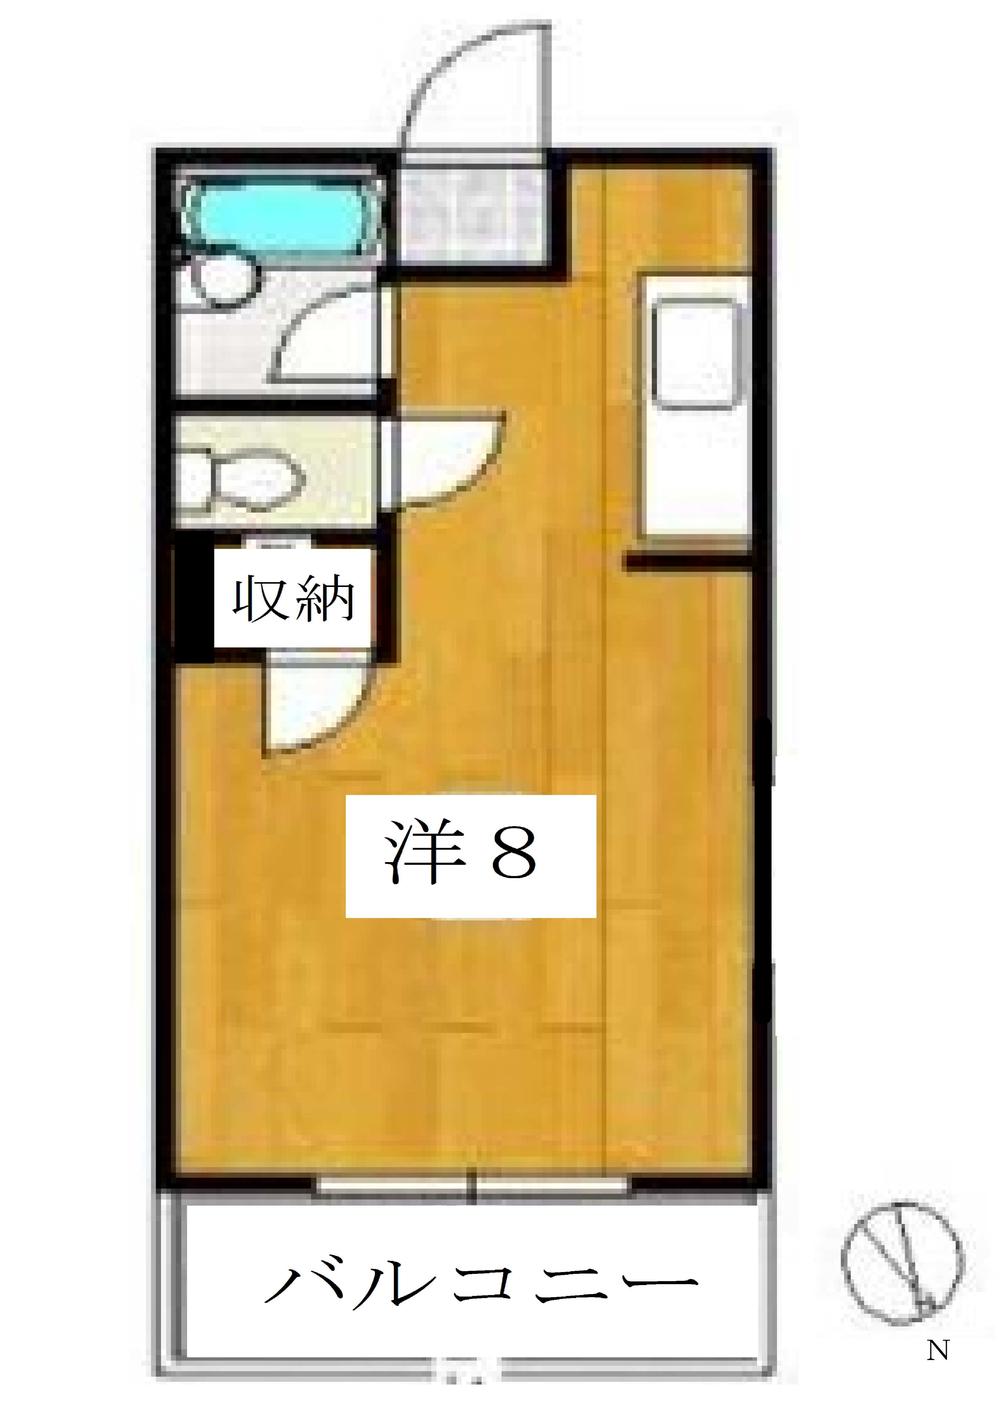 Floor plan. Price 2.7 million yen, Occupied area 19.23 sq m , Balcony area 3.3 sq m